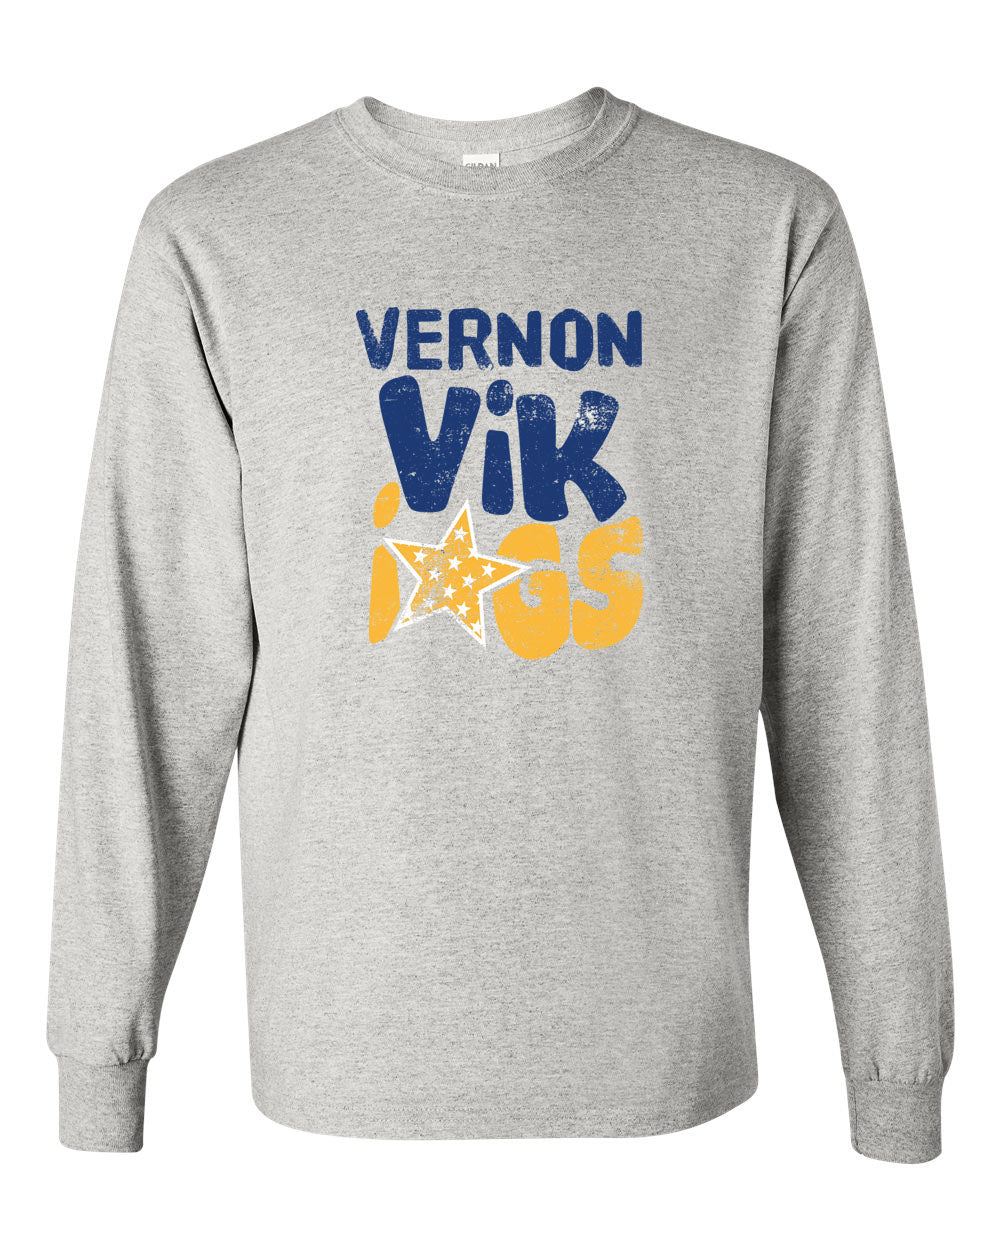 Vernon Design 14 Long Sleeve Shirt